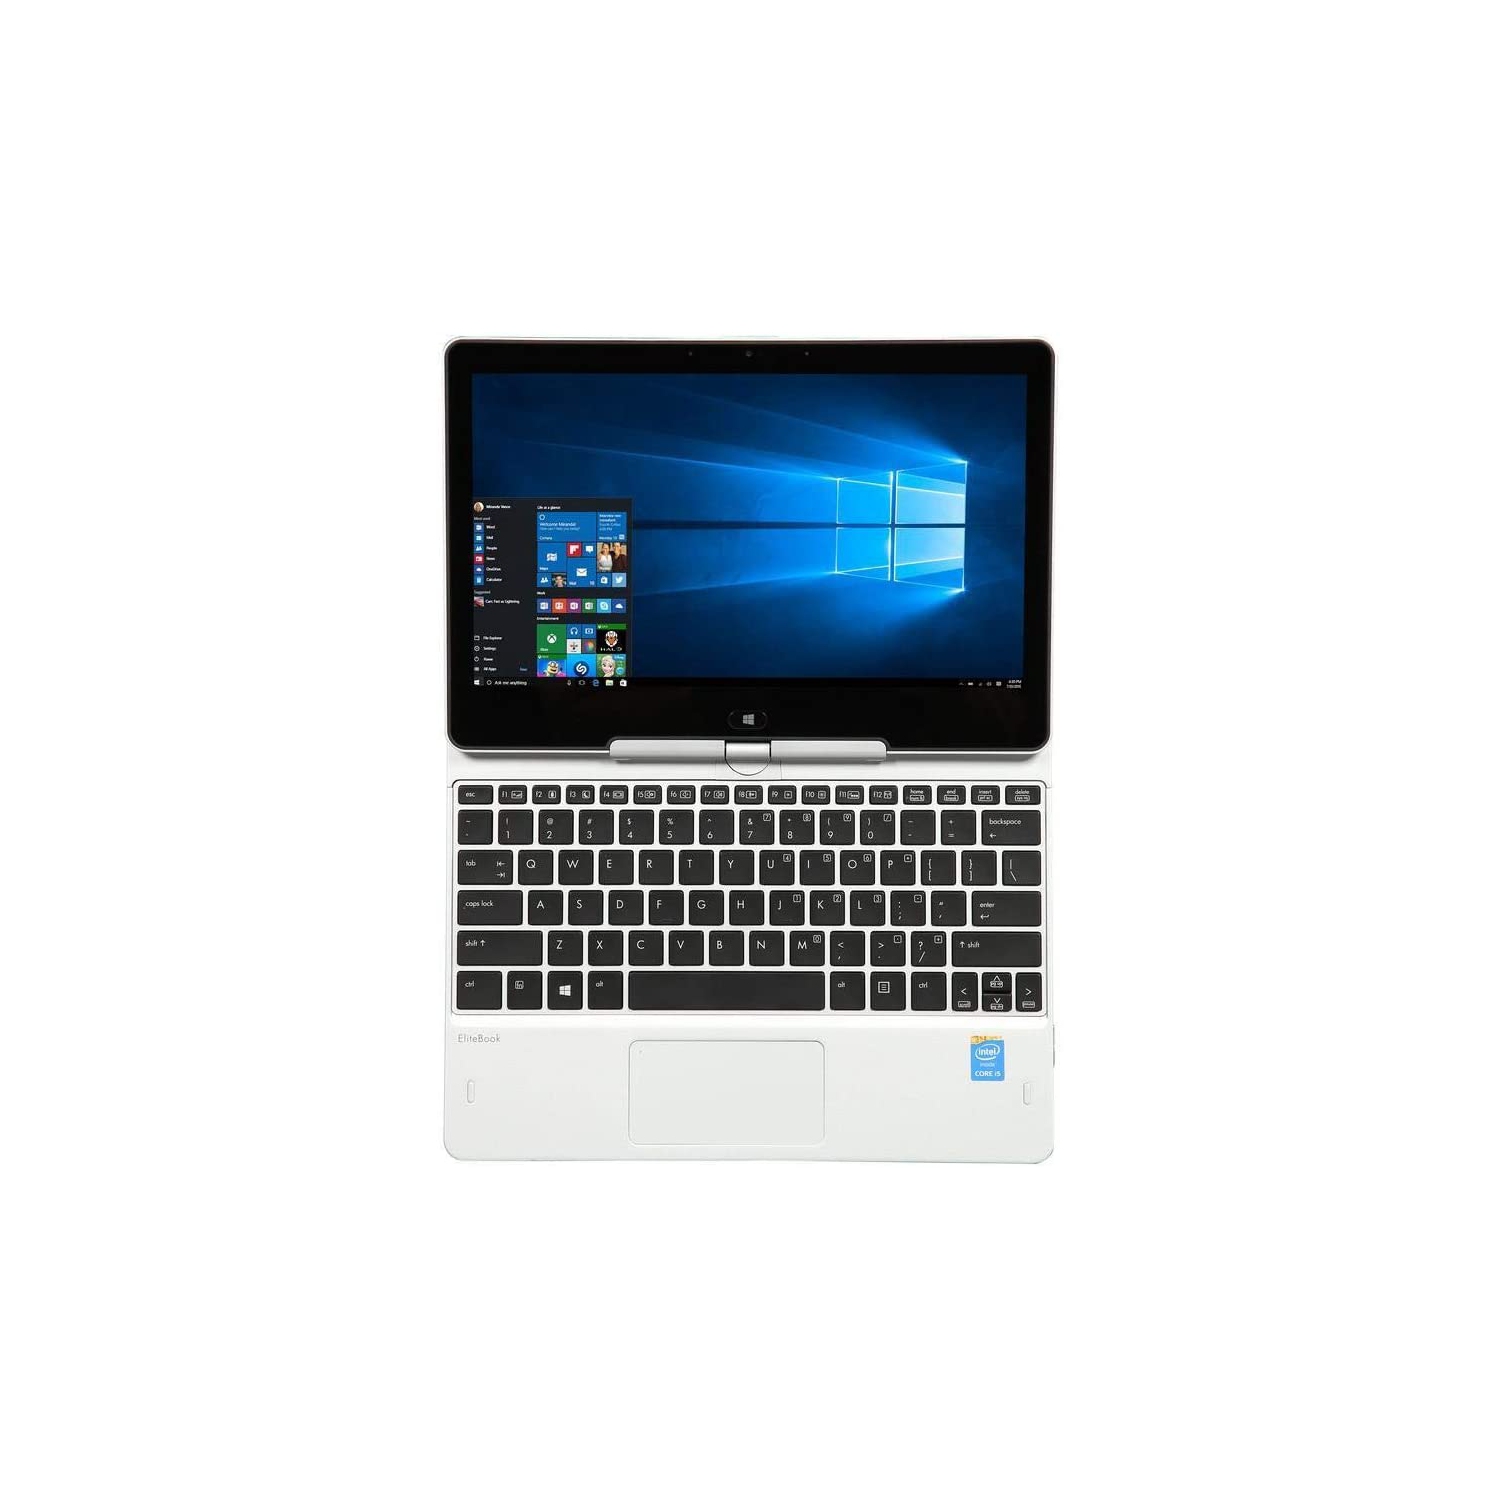 Refurbished (Fair) HP EliteBook Revolve 810 G3 11.6" Touch Screen, Intel Core i5-5300U 2.3GHZ, 8GB DDR3L, 128GB SSD, DP, USB 3.0, Windows 10 - Refurbished (Fair)